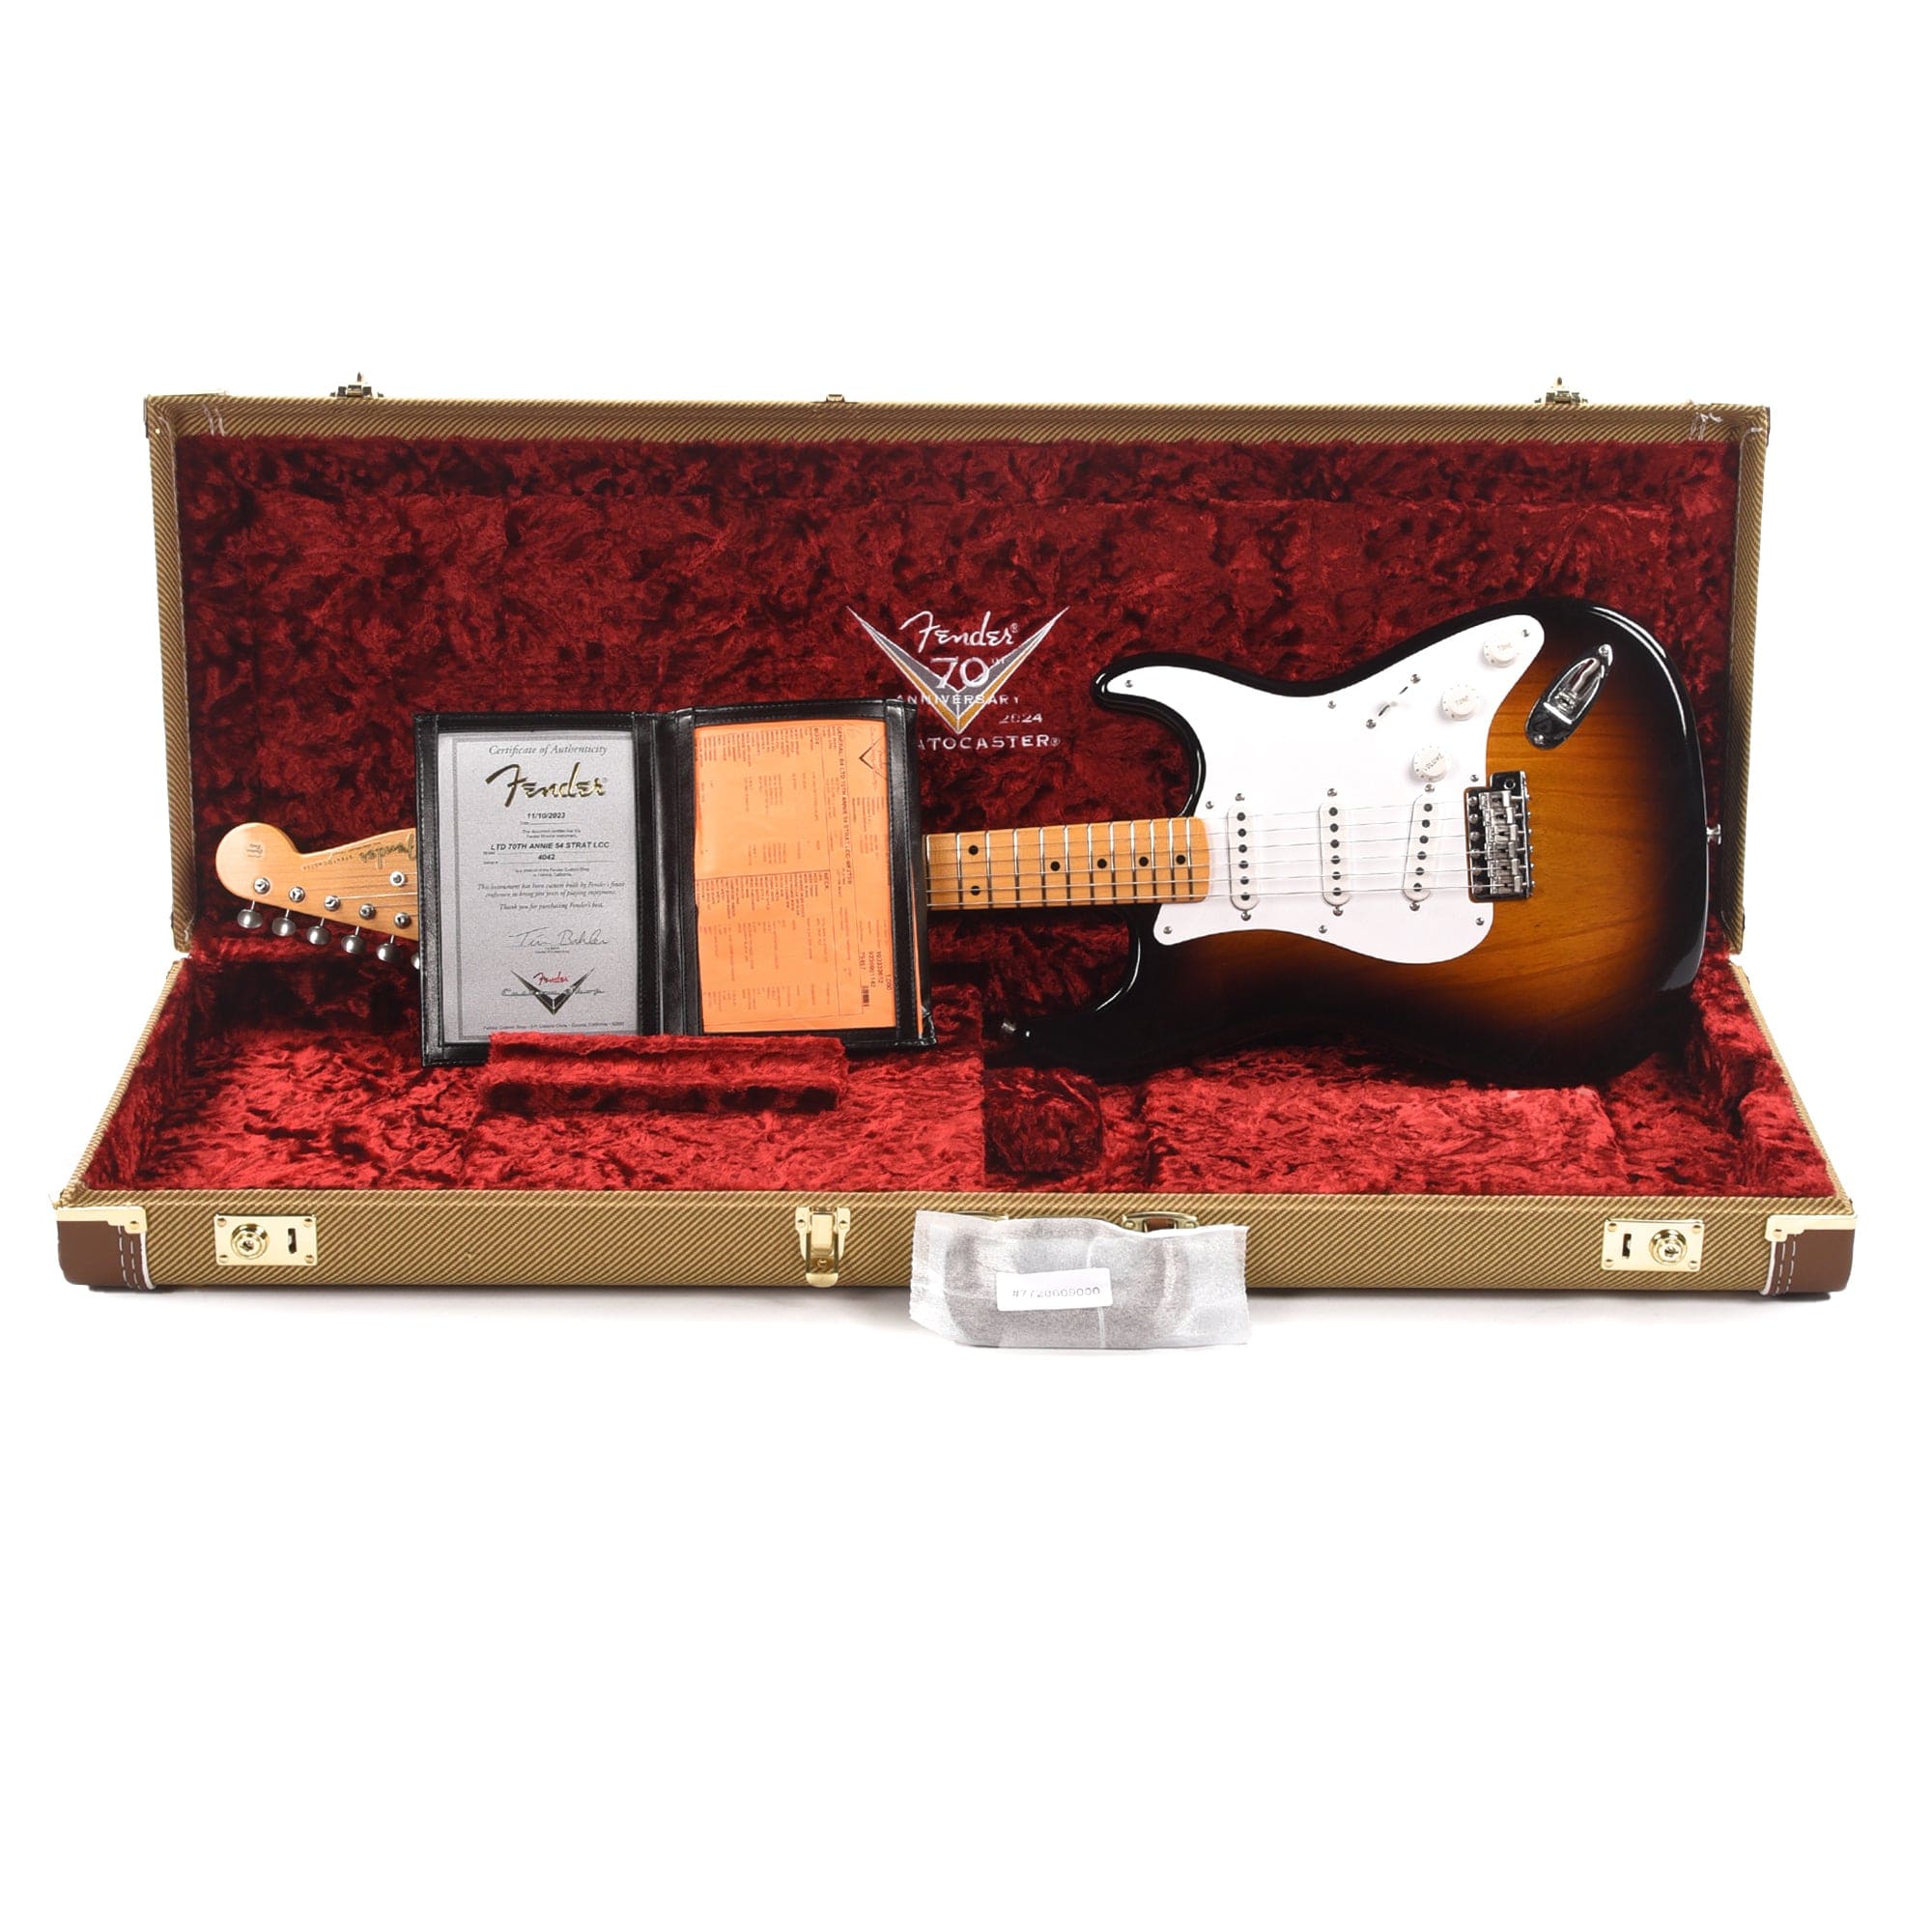 Fender Custom Shop Limited Edition 70th Anniversary 1954 Stratocaster Deluxe Closet Classic Wide-Fade 2-Color Sunburst Electric Guitars / Solid Body